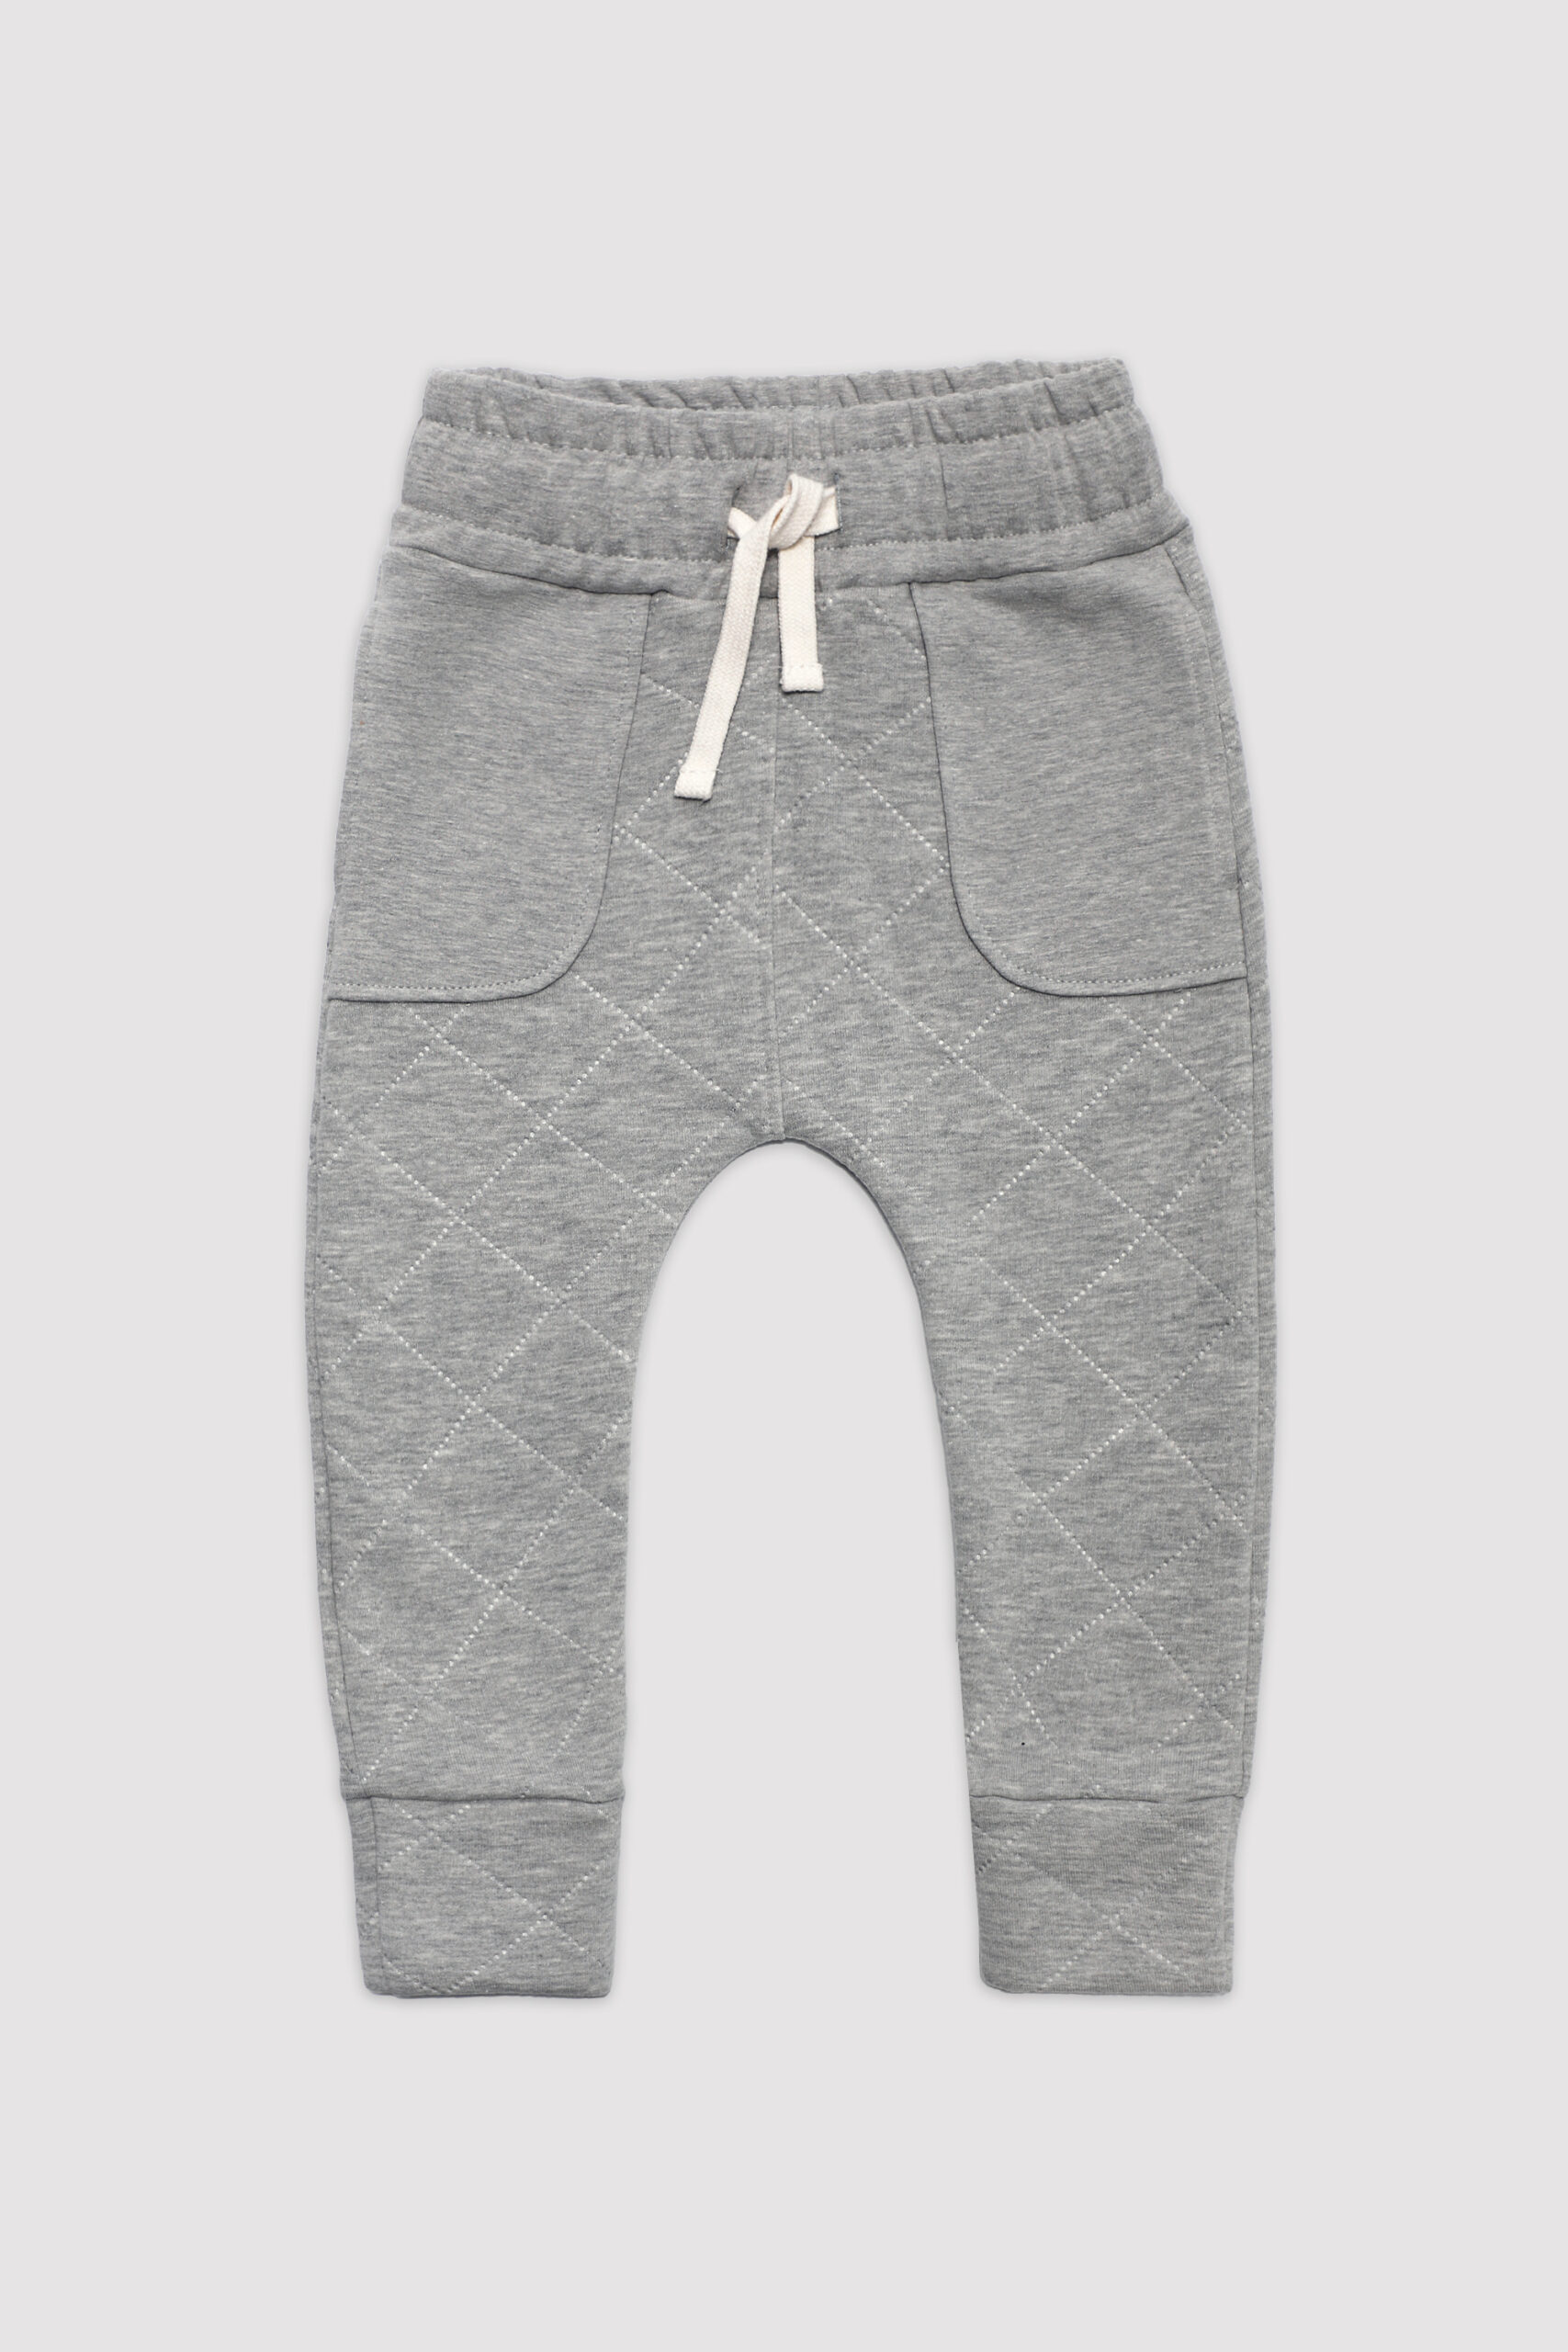 Spodnie Quilted grey MINIKID joggers